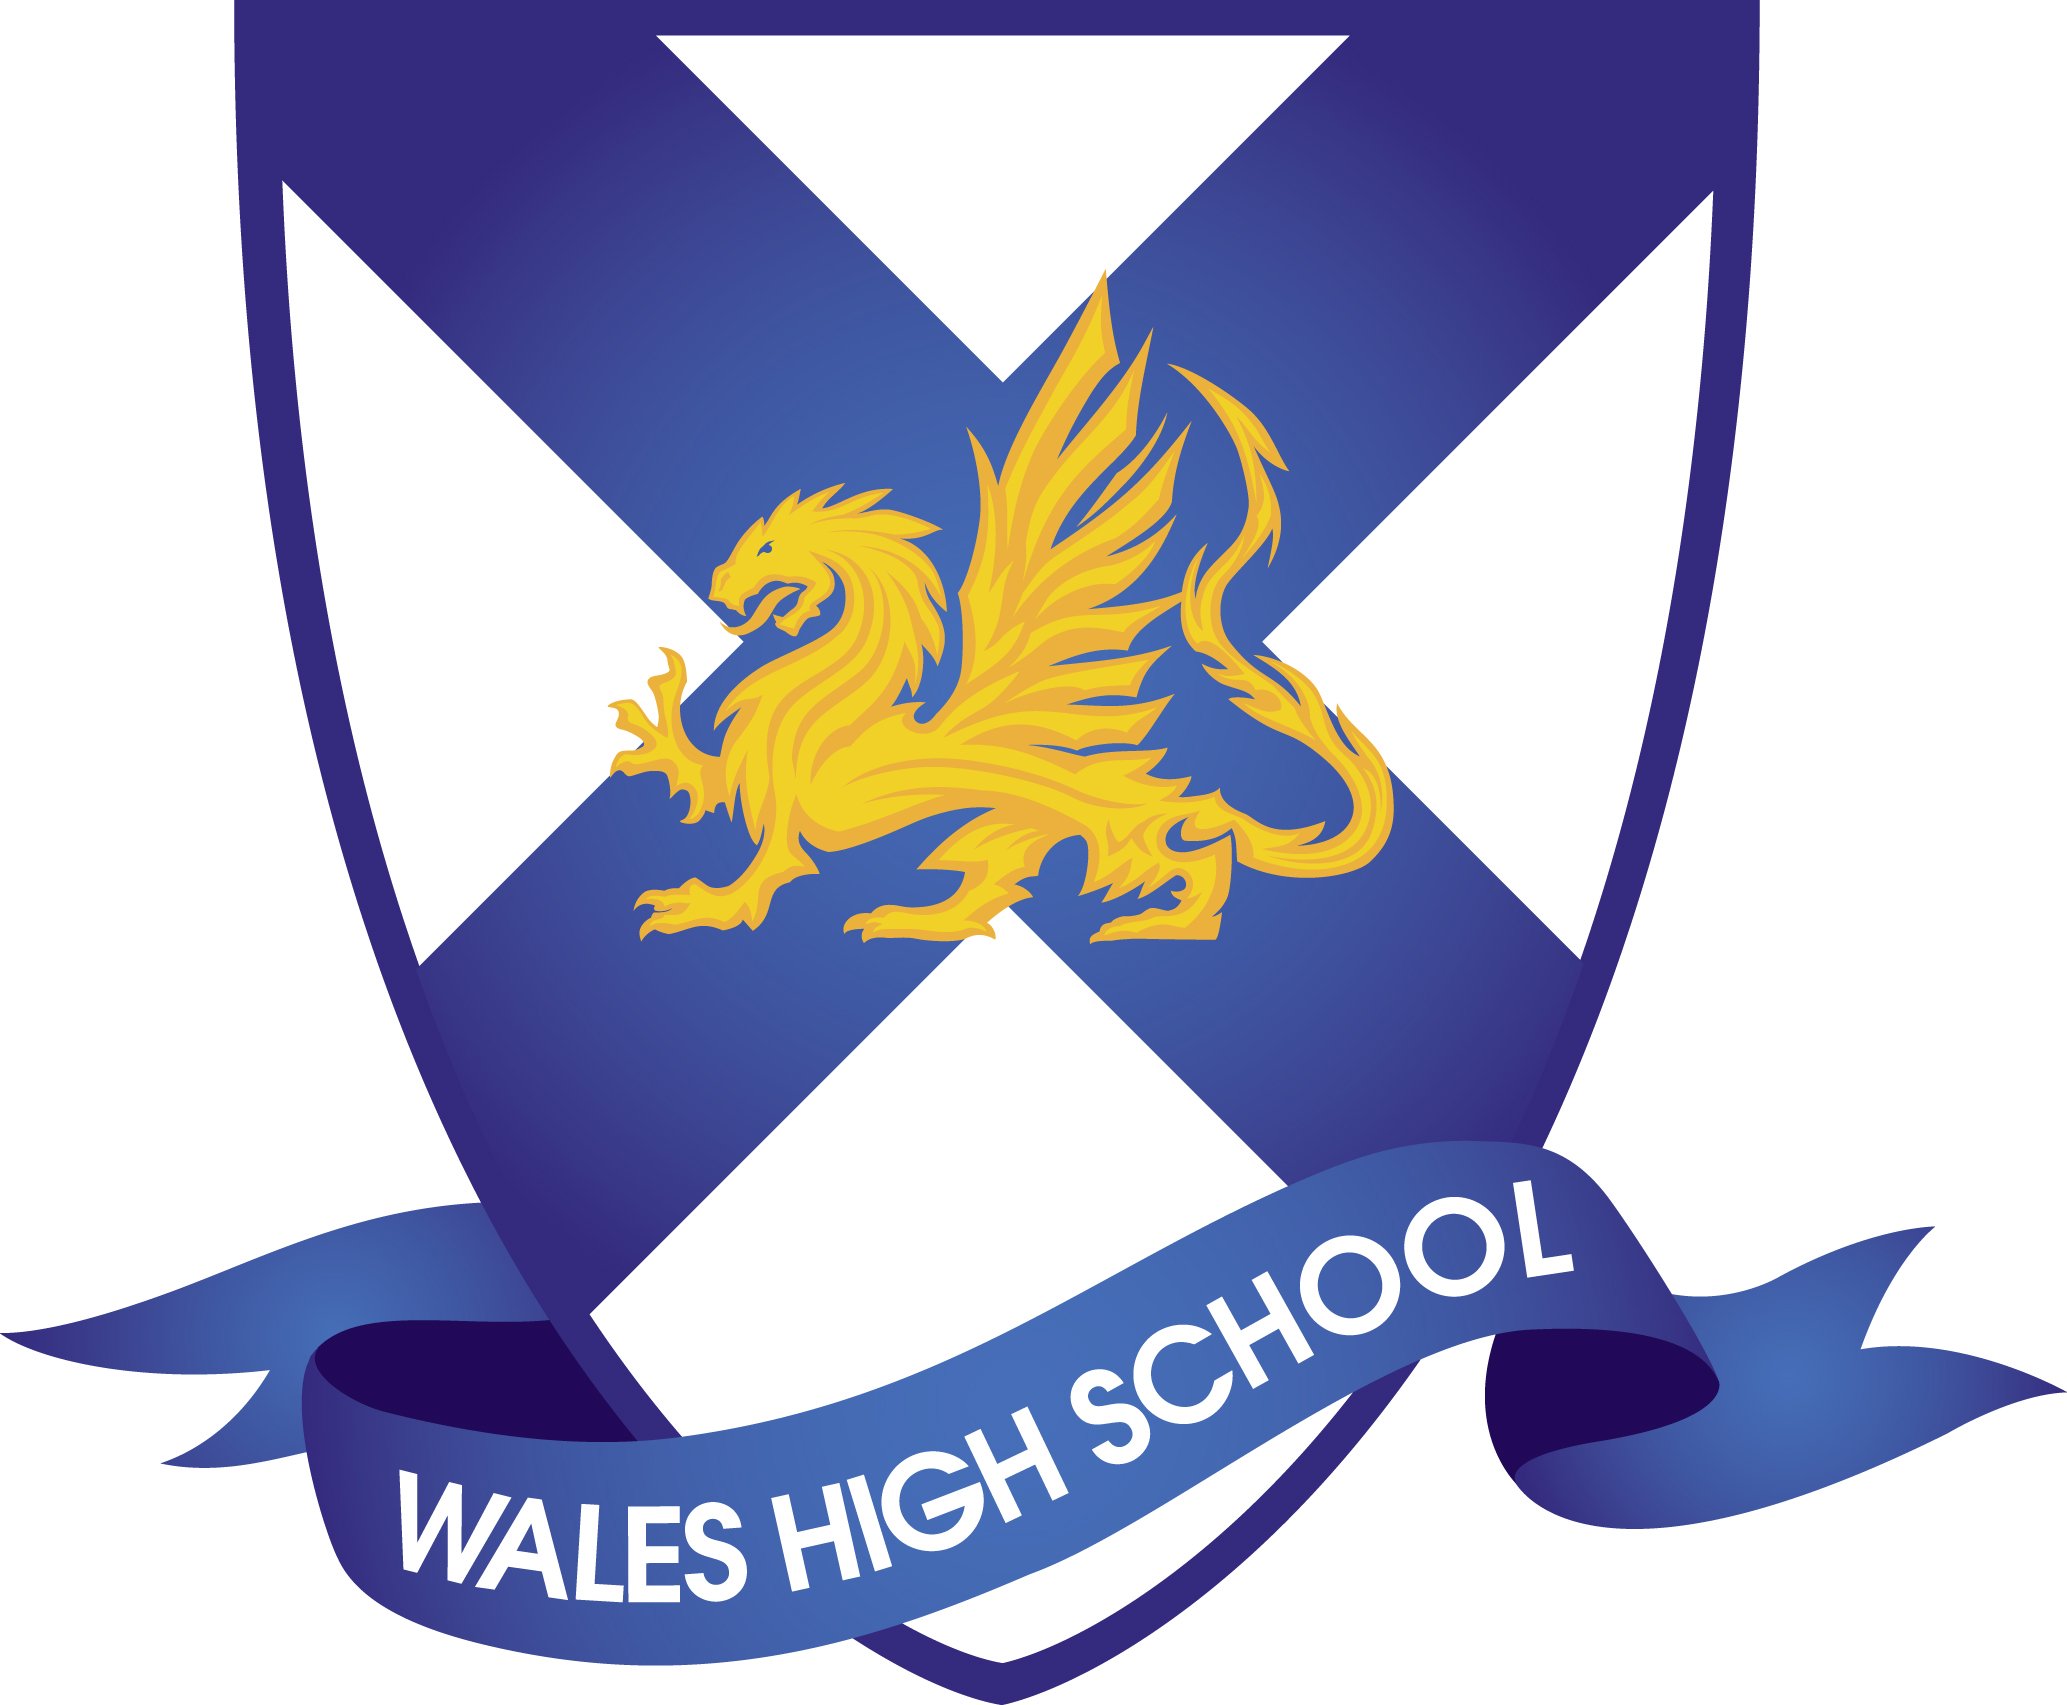 Wales High School.jpeg